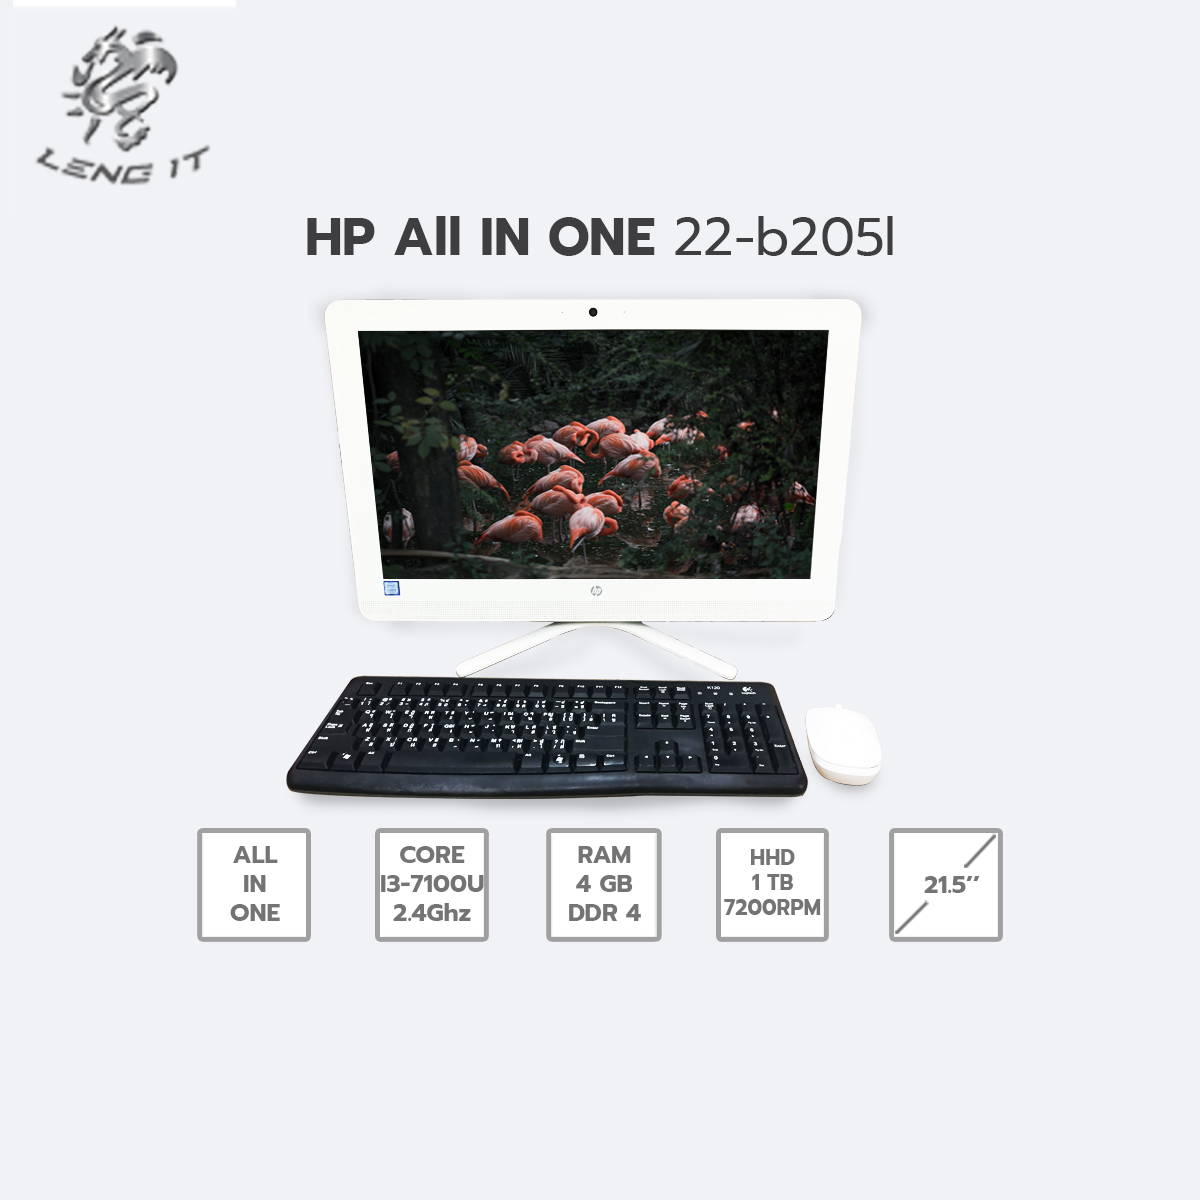 HP คอมพิวเตอร์ All in one รุ่น 22-b205l มือสอง บอดี้ออกเหลืองๆ i3-Gen7/การ์ดจอแยก 920MX 2GB /แรม4gbDDR4 /HDD 1TB 7200prm/จอ Full HD 21.5นิ้ว /Win 10Pro แท้ ฟรี เม้า+คีย์บอร์ด